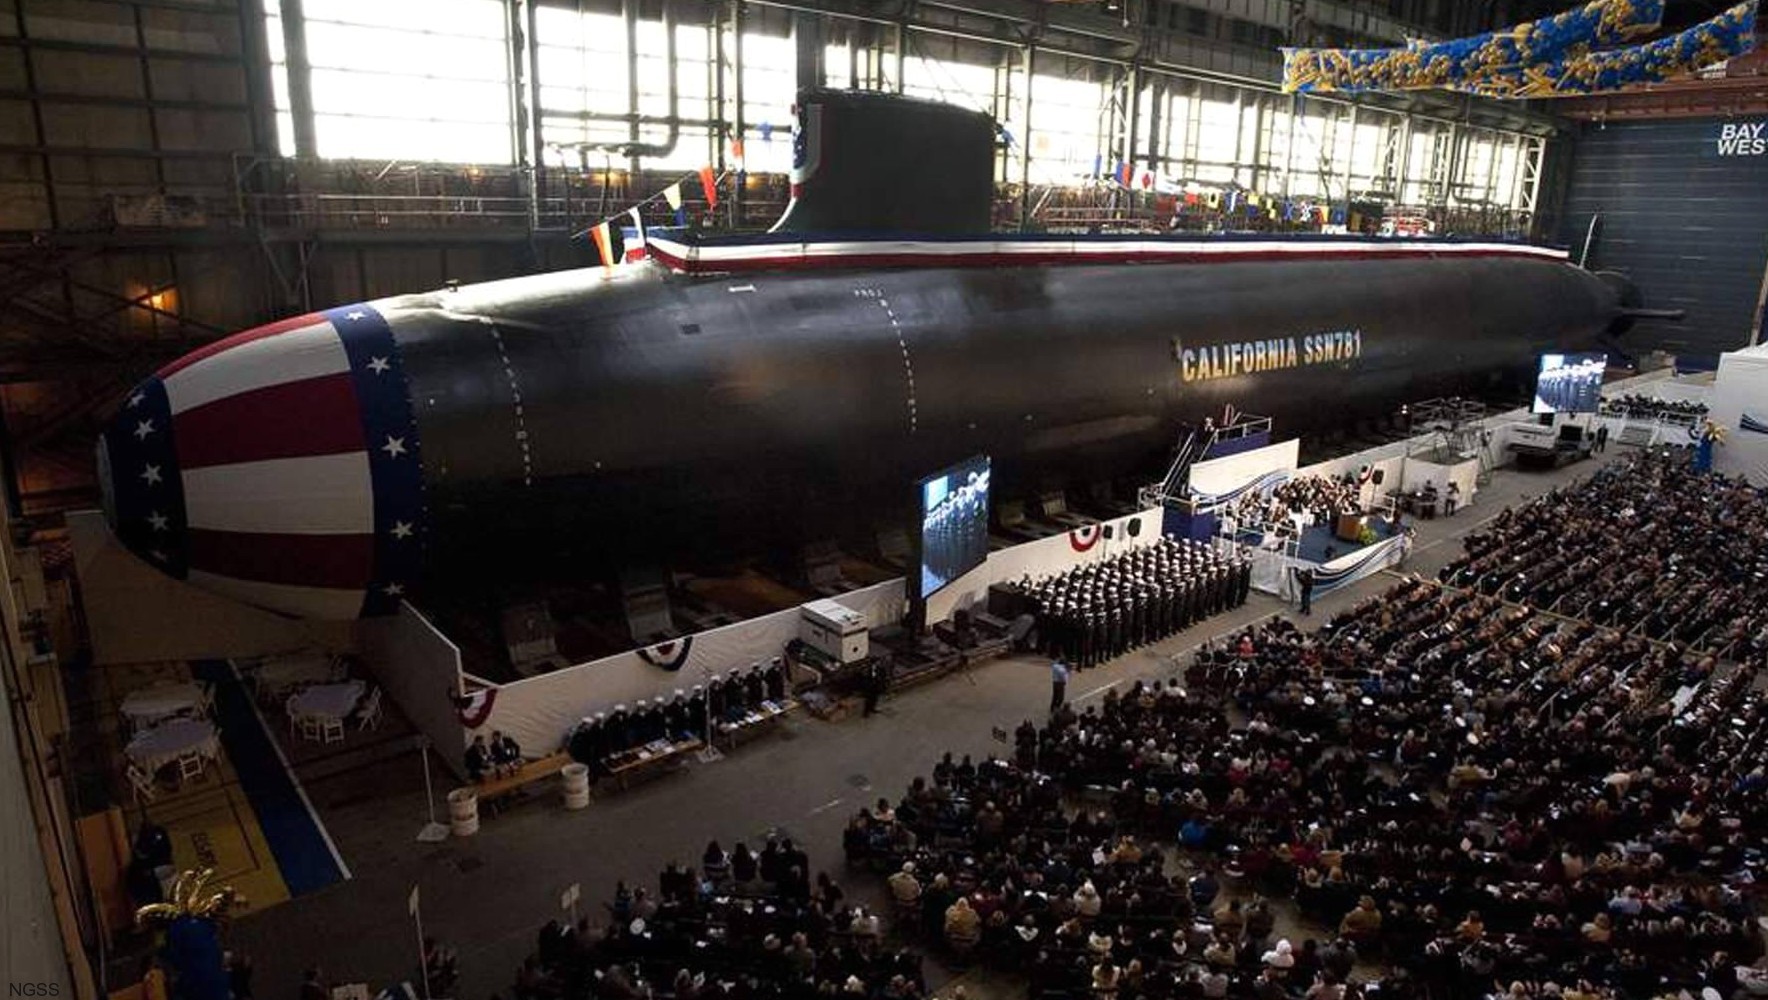 ssn-781 uss california virginia class attack submarine us navy 22 christening ceremony newport news virginia